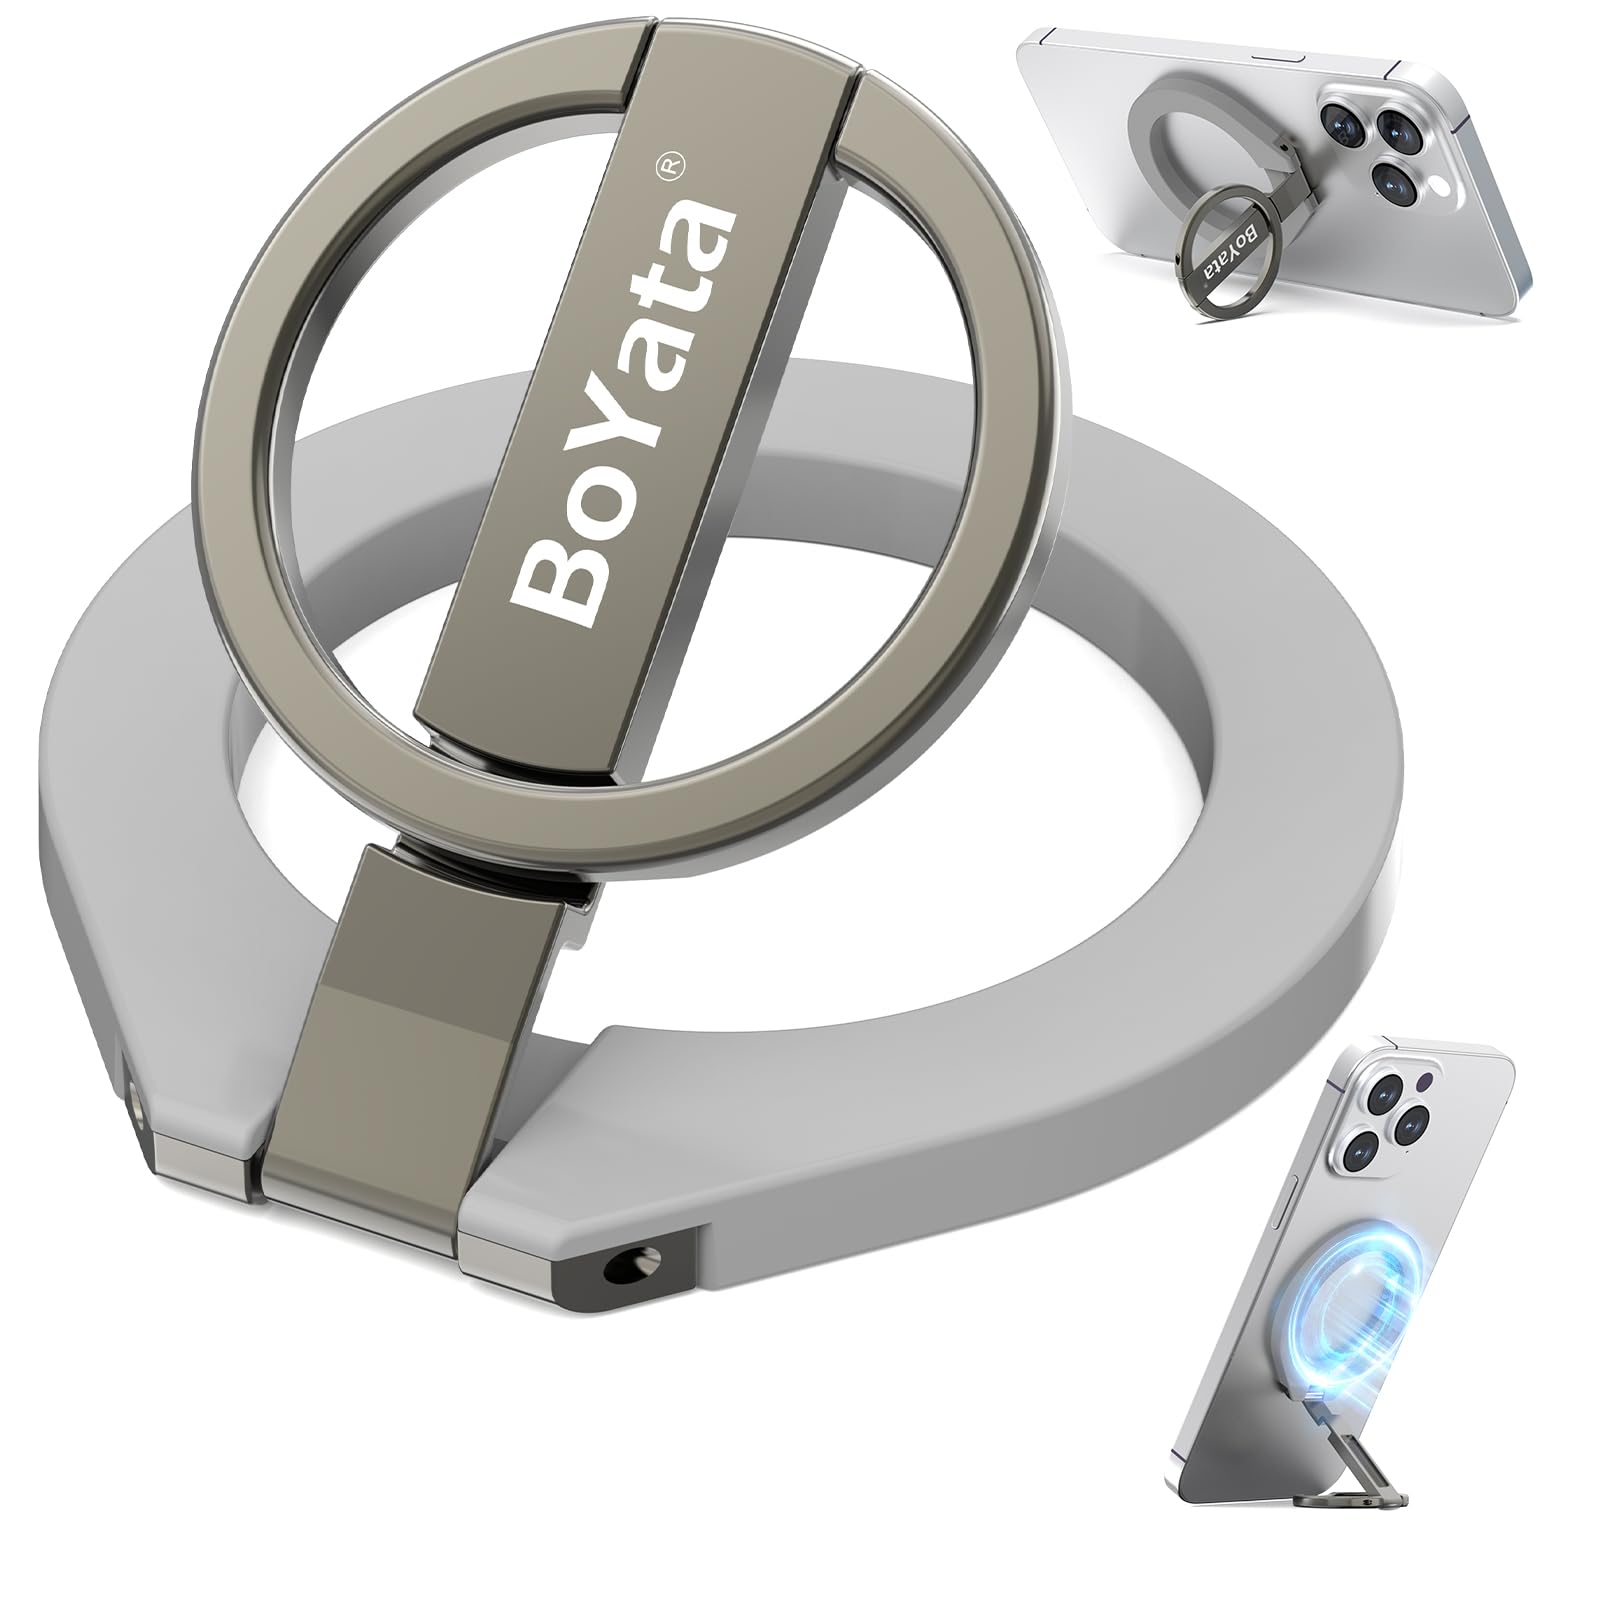 BoYata マグネット式スマホリング MagSafe対応 バンカーリング スマホスタンド機能 360度回転 角度調整可能 磁気増強メタルリング付き 落